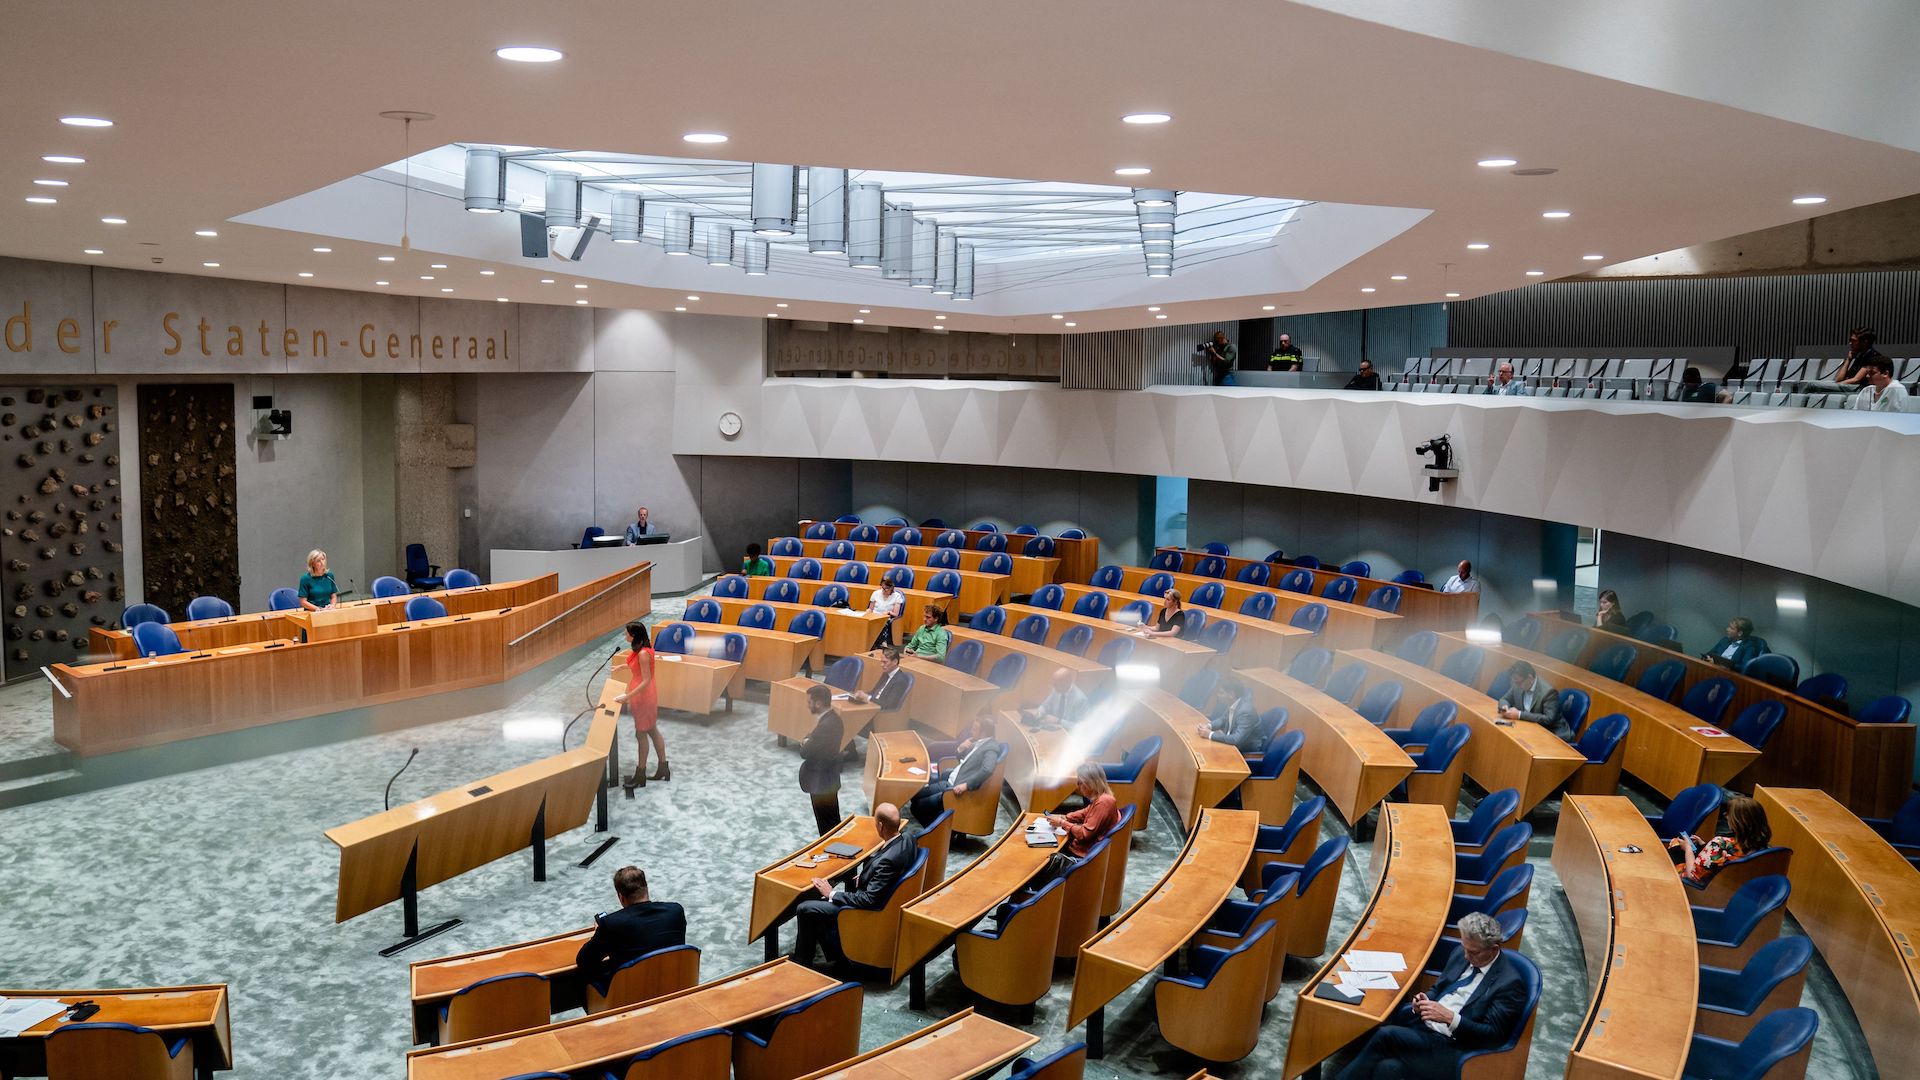 A view of the Dutch parliament plenary room